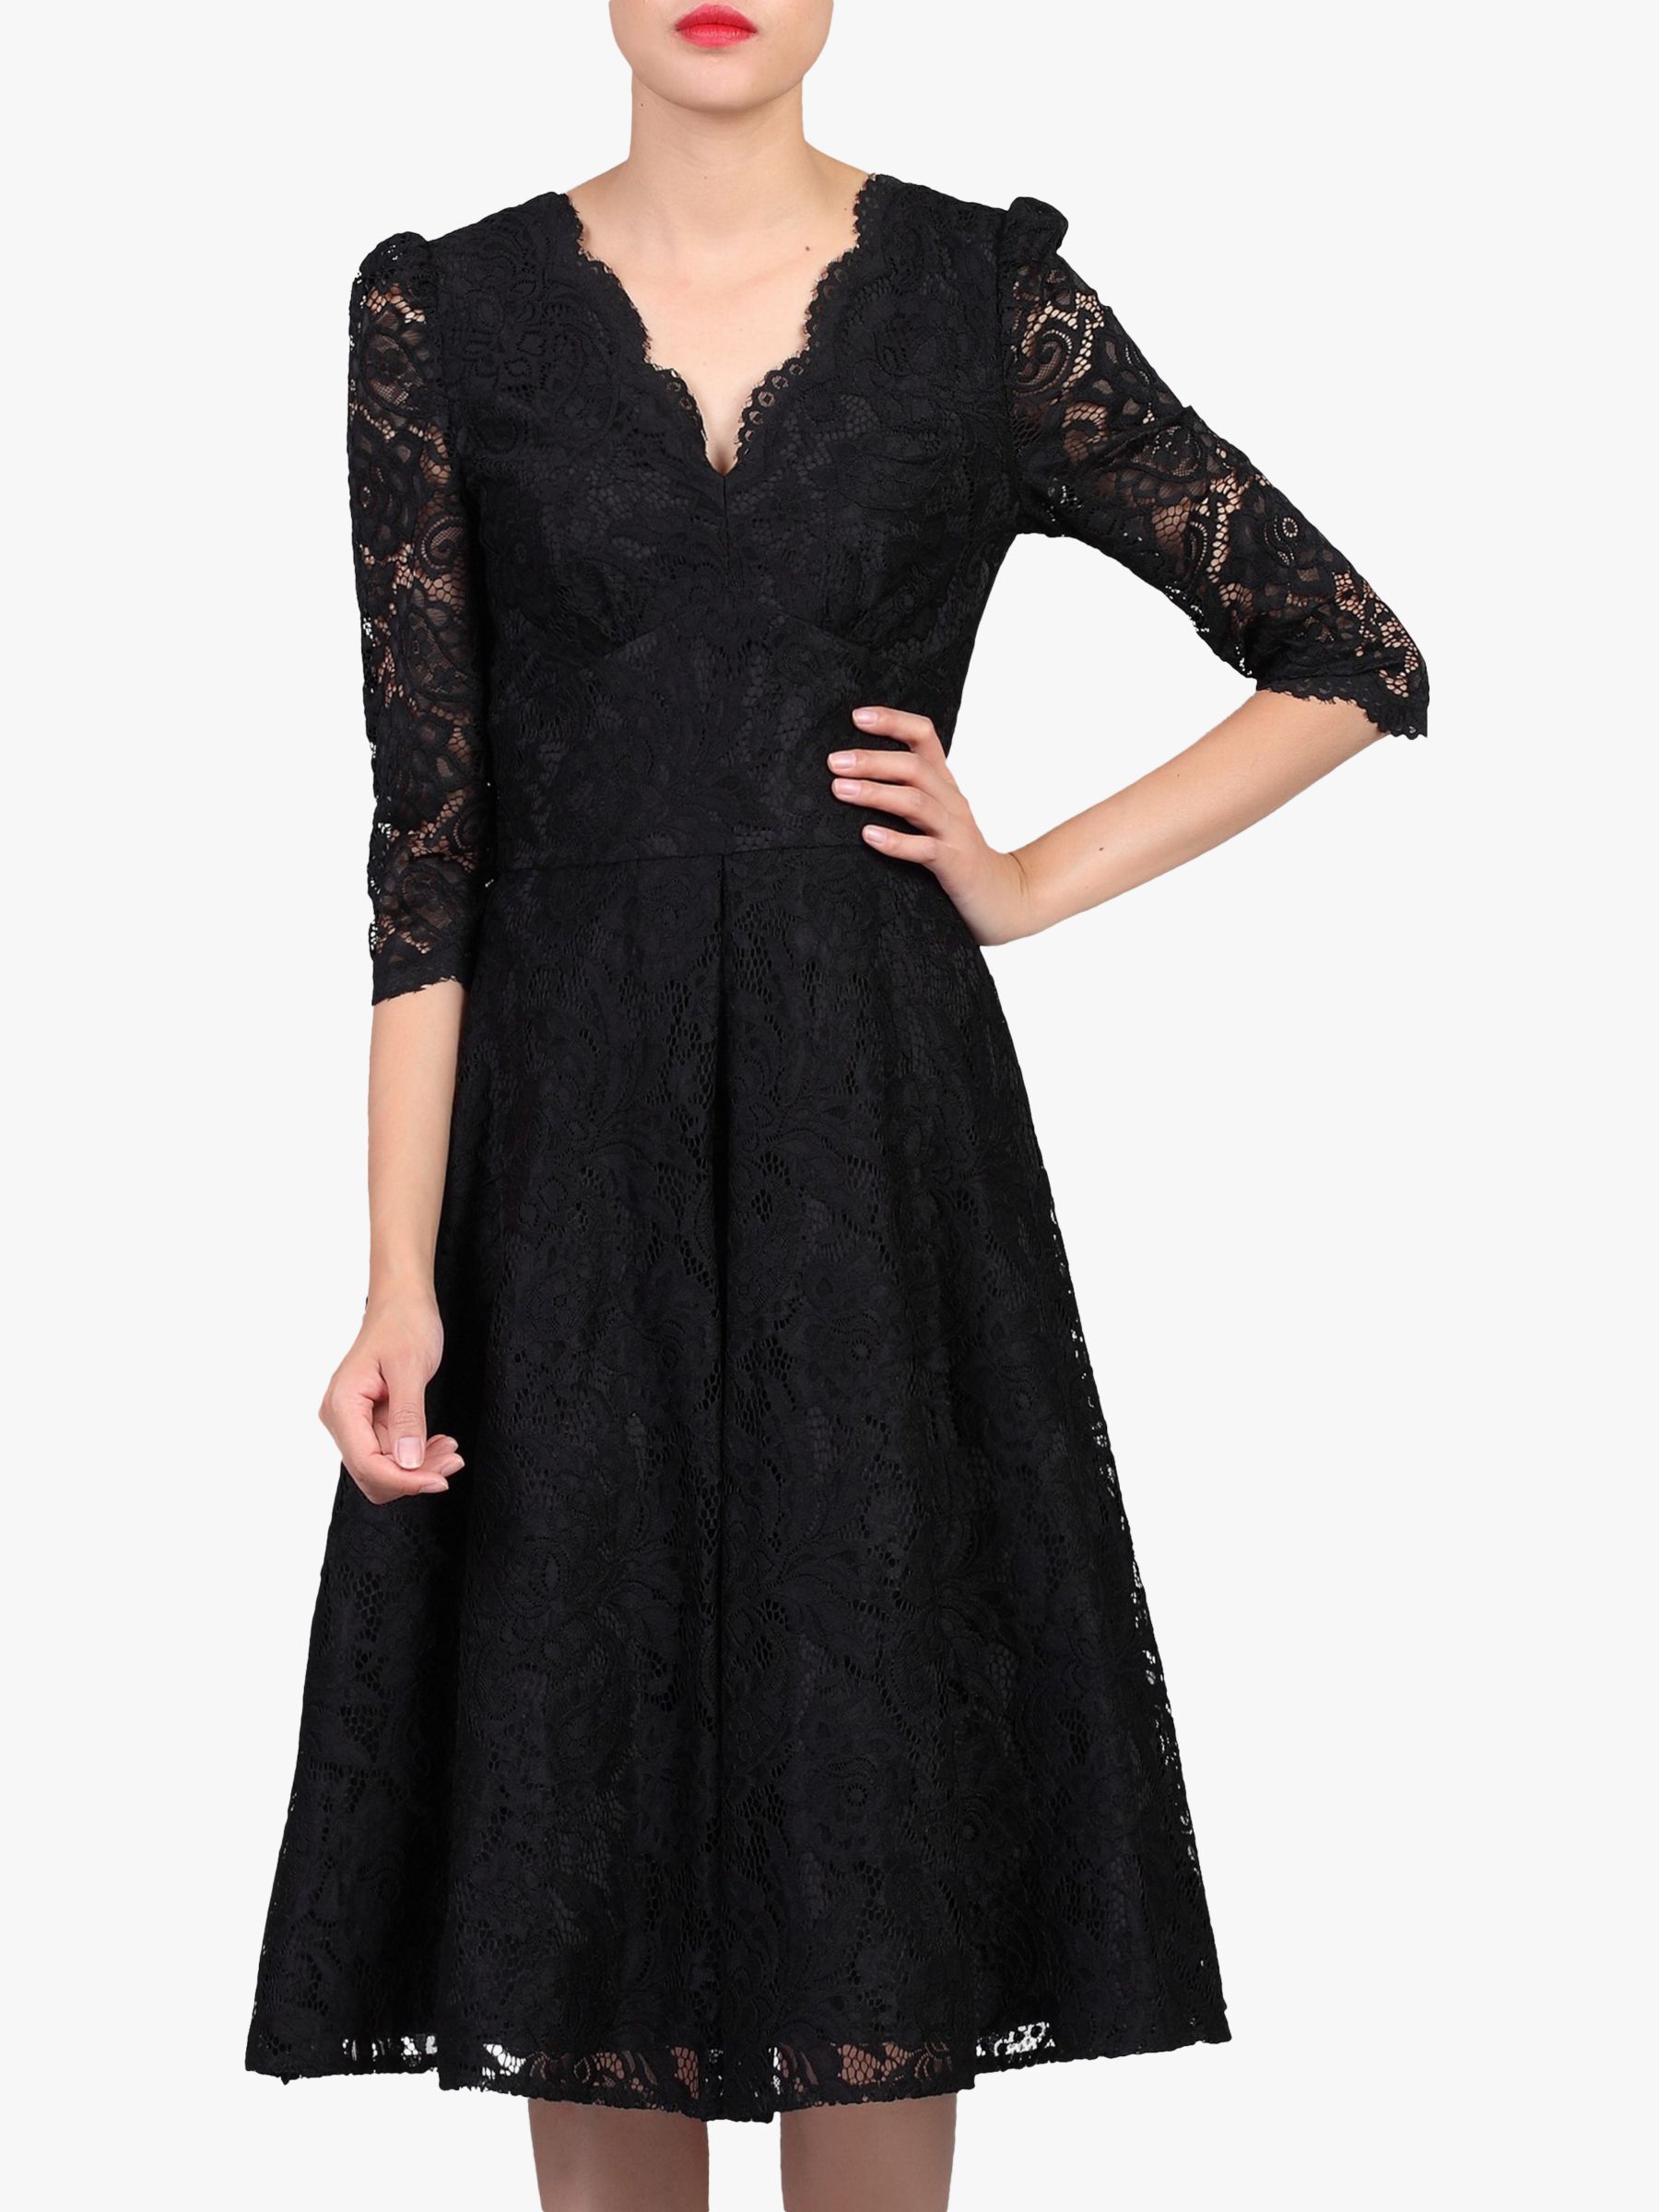 venus long black dress